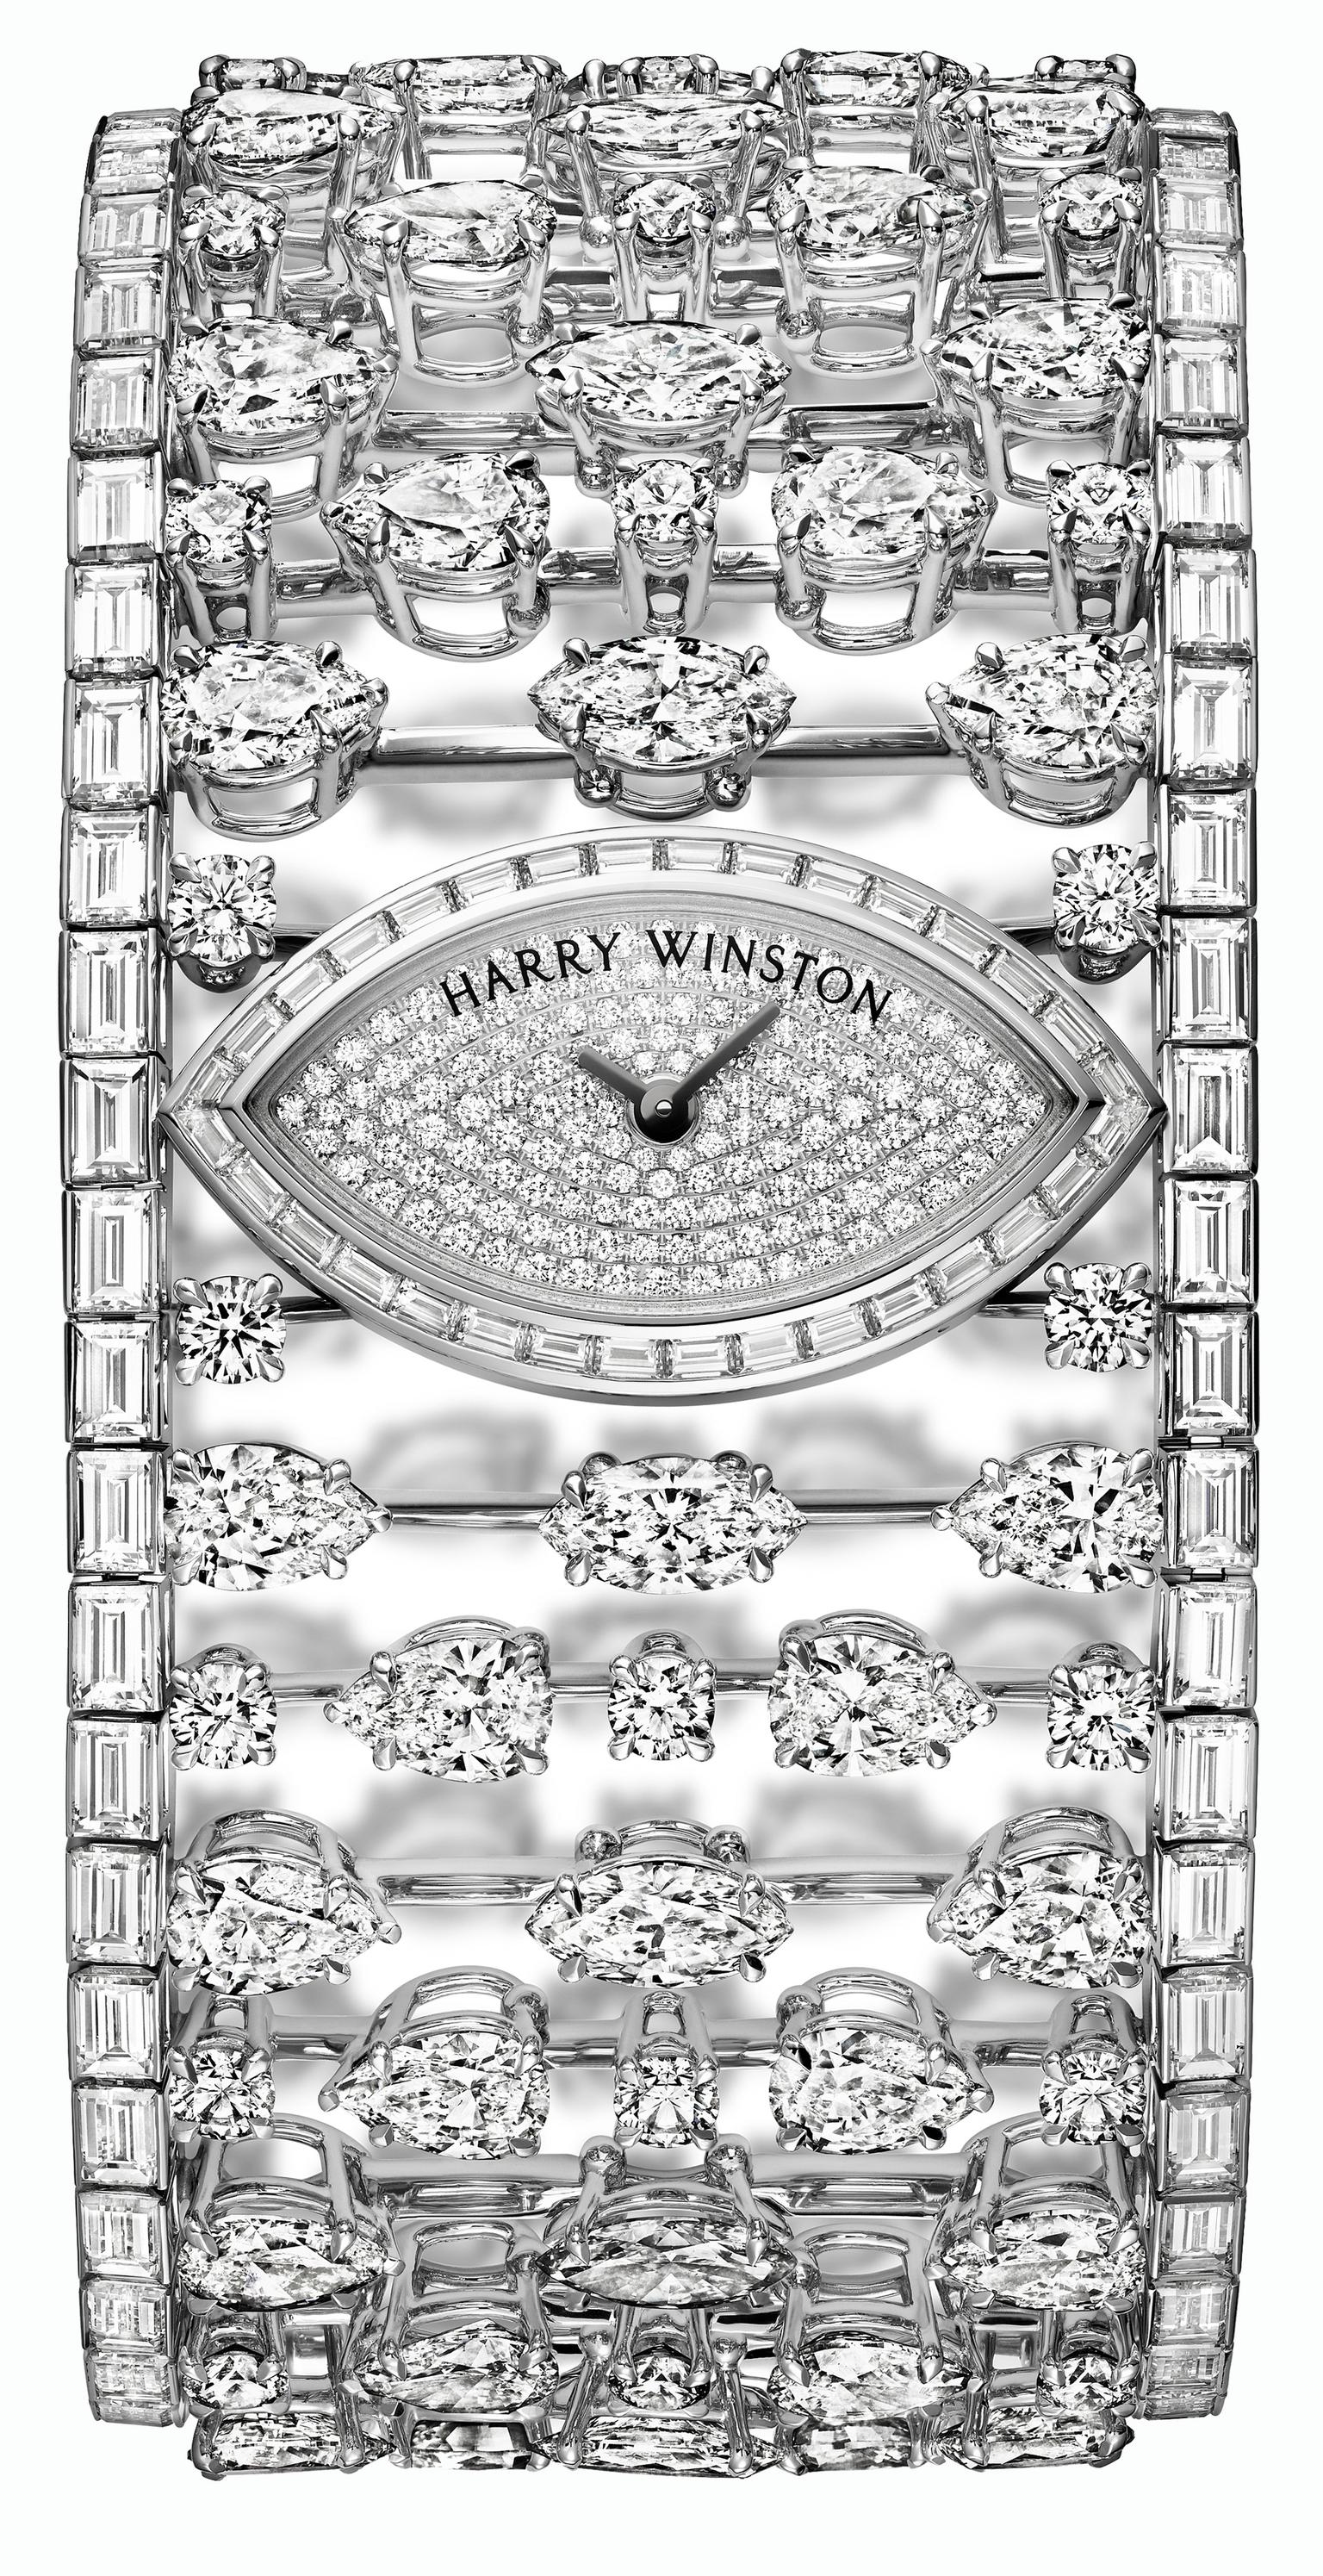 Harry Winston Mrs Winston high jewellery watch_20131115_Zoom